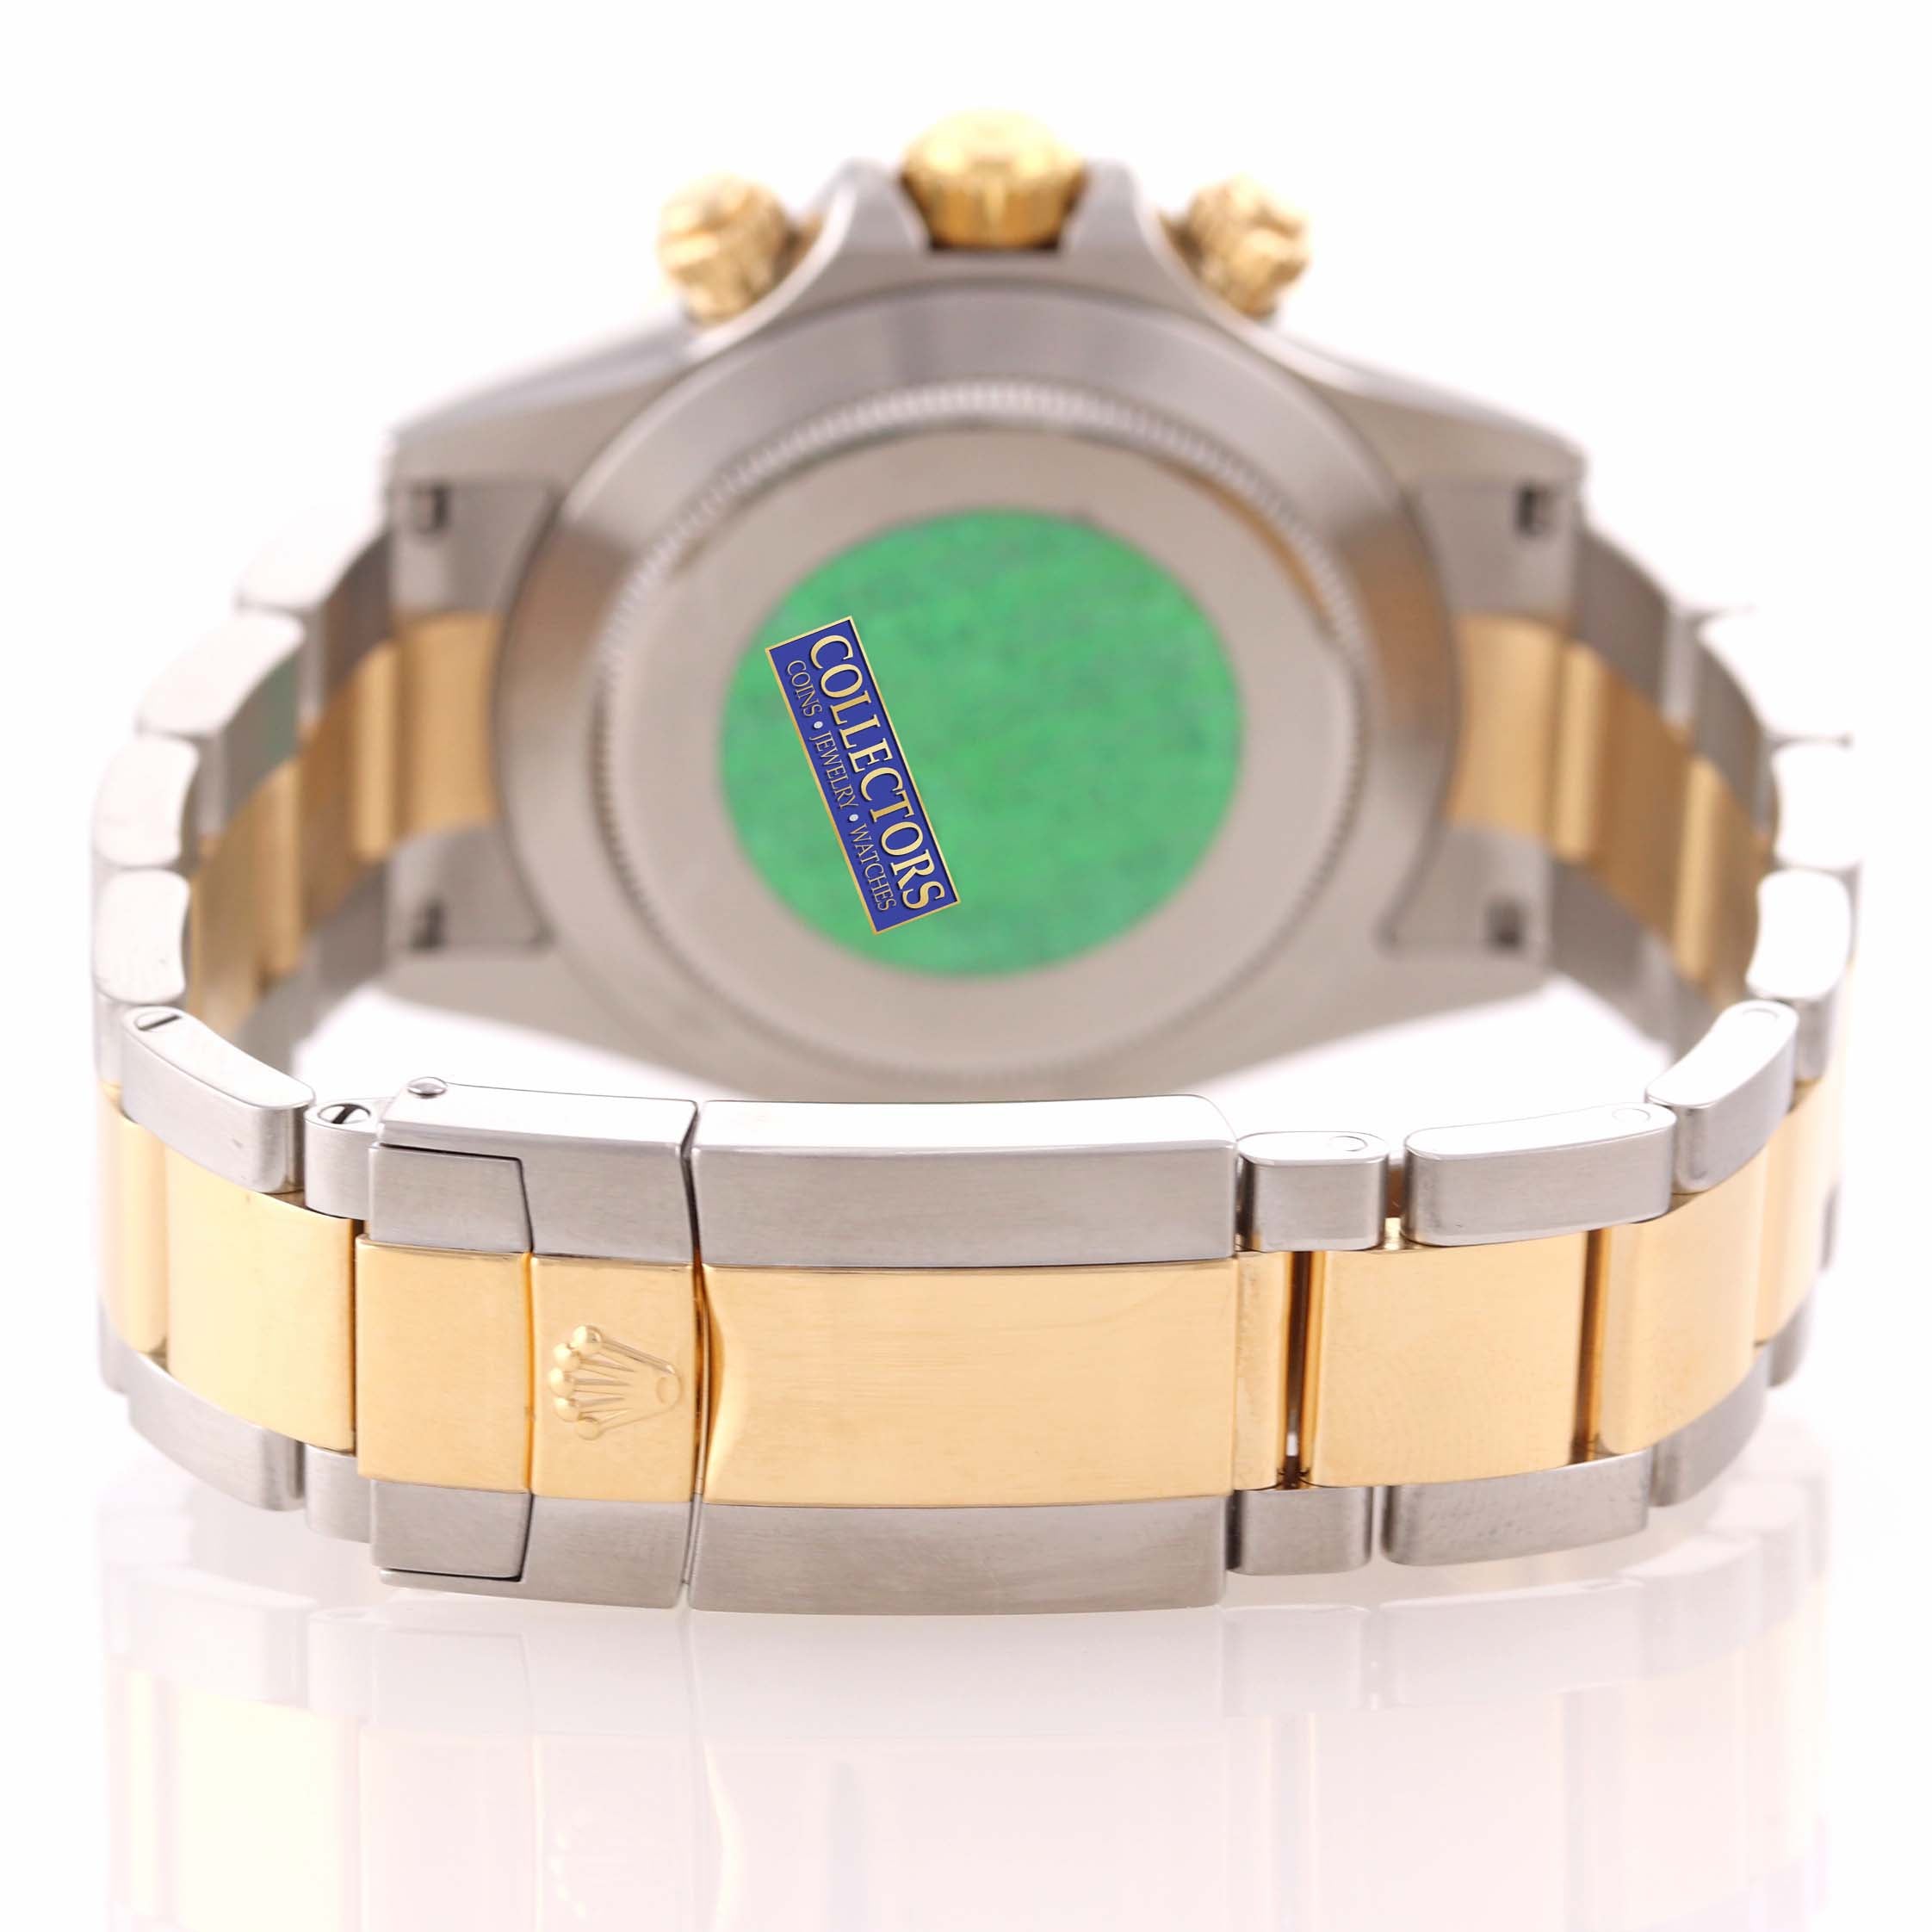 2007 116523 Rolex Daytona Chronograph Slate Steel 18k Gold Two Tone Watch Box